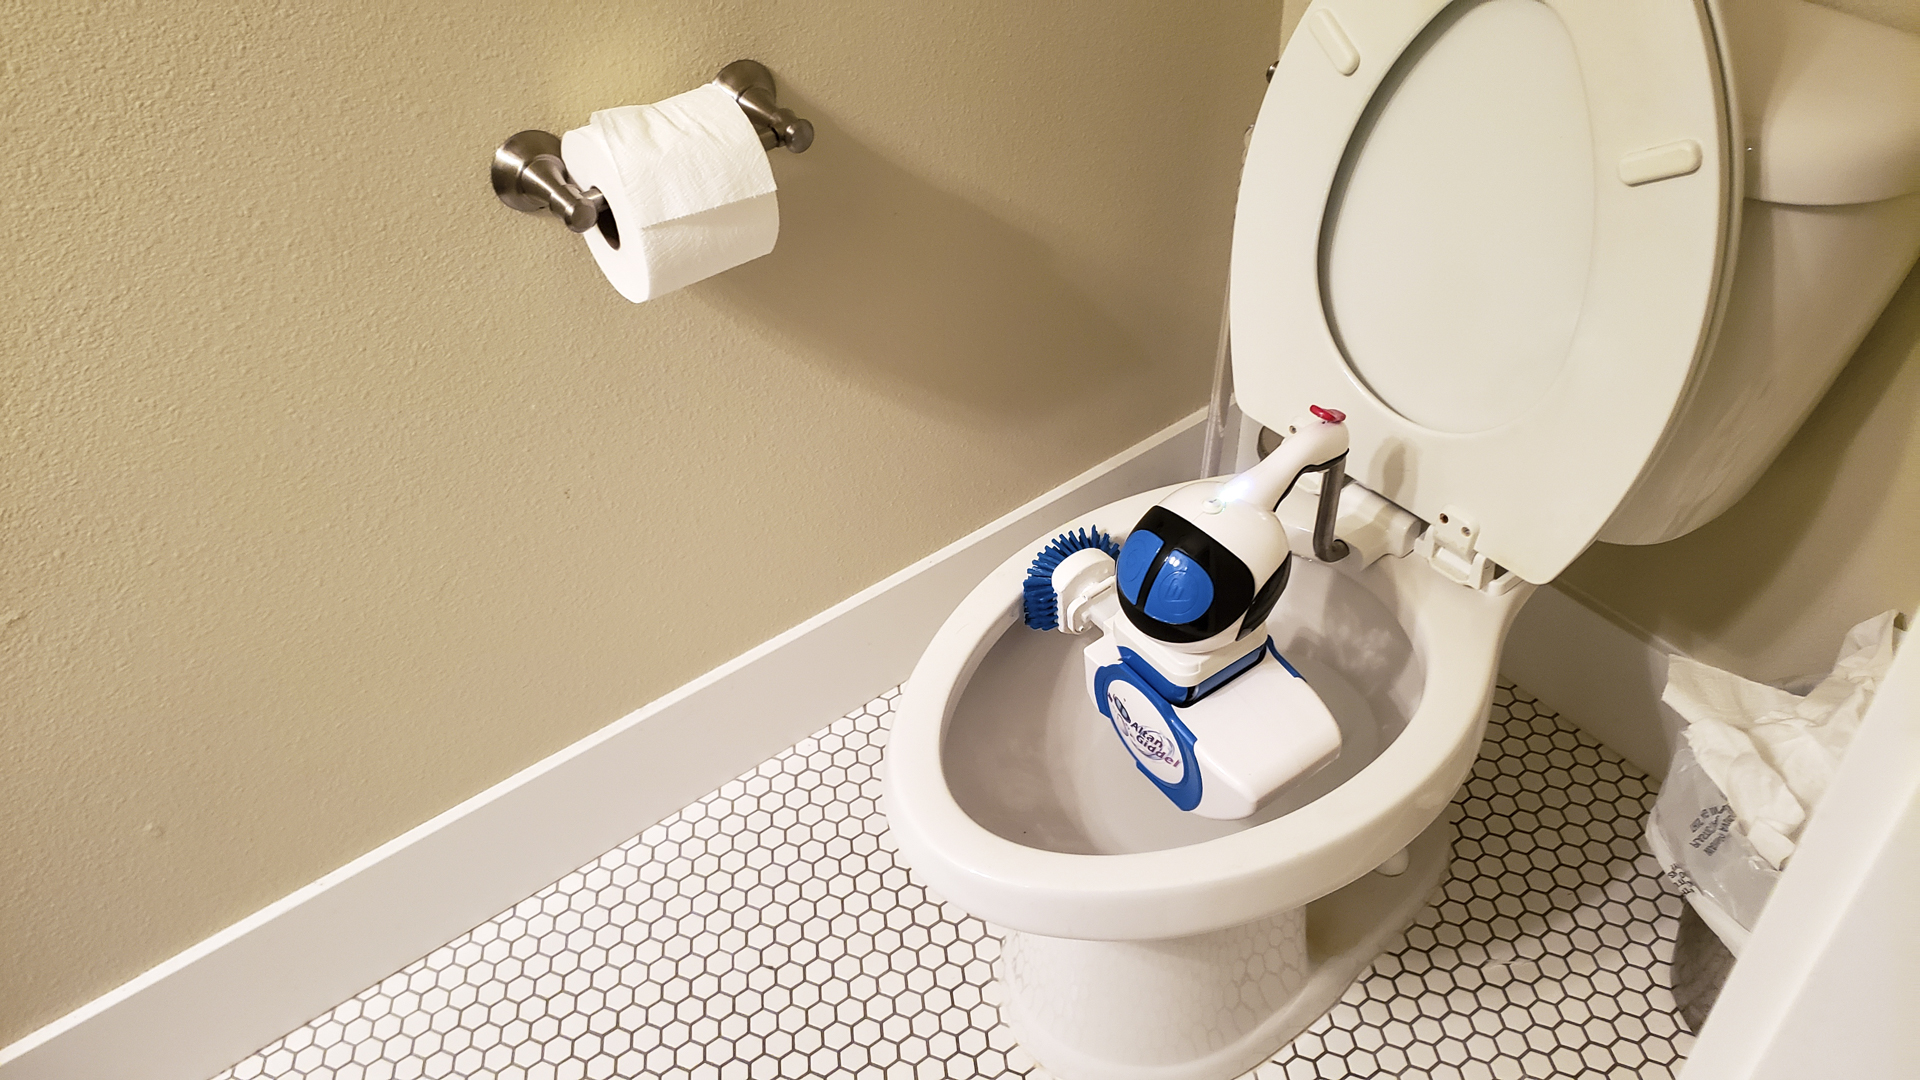 https://www.digitaltrends.com/wp-content/uploads/2019/03/giddel-toilet-cleaning-robot-7162.jpg?fit=1920%2C1080&p=1